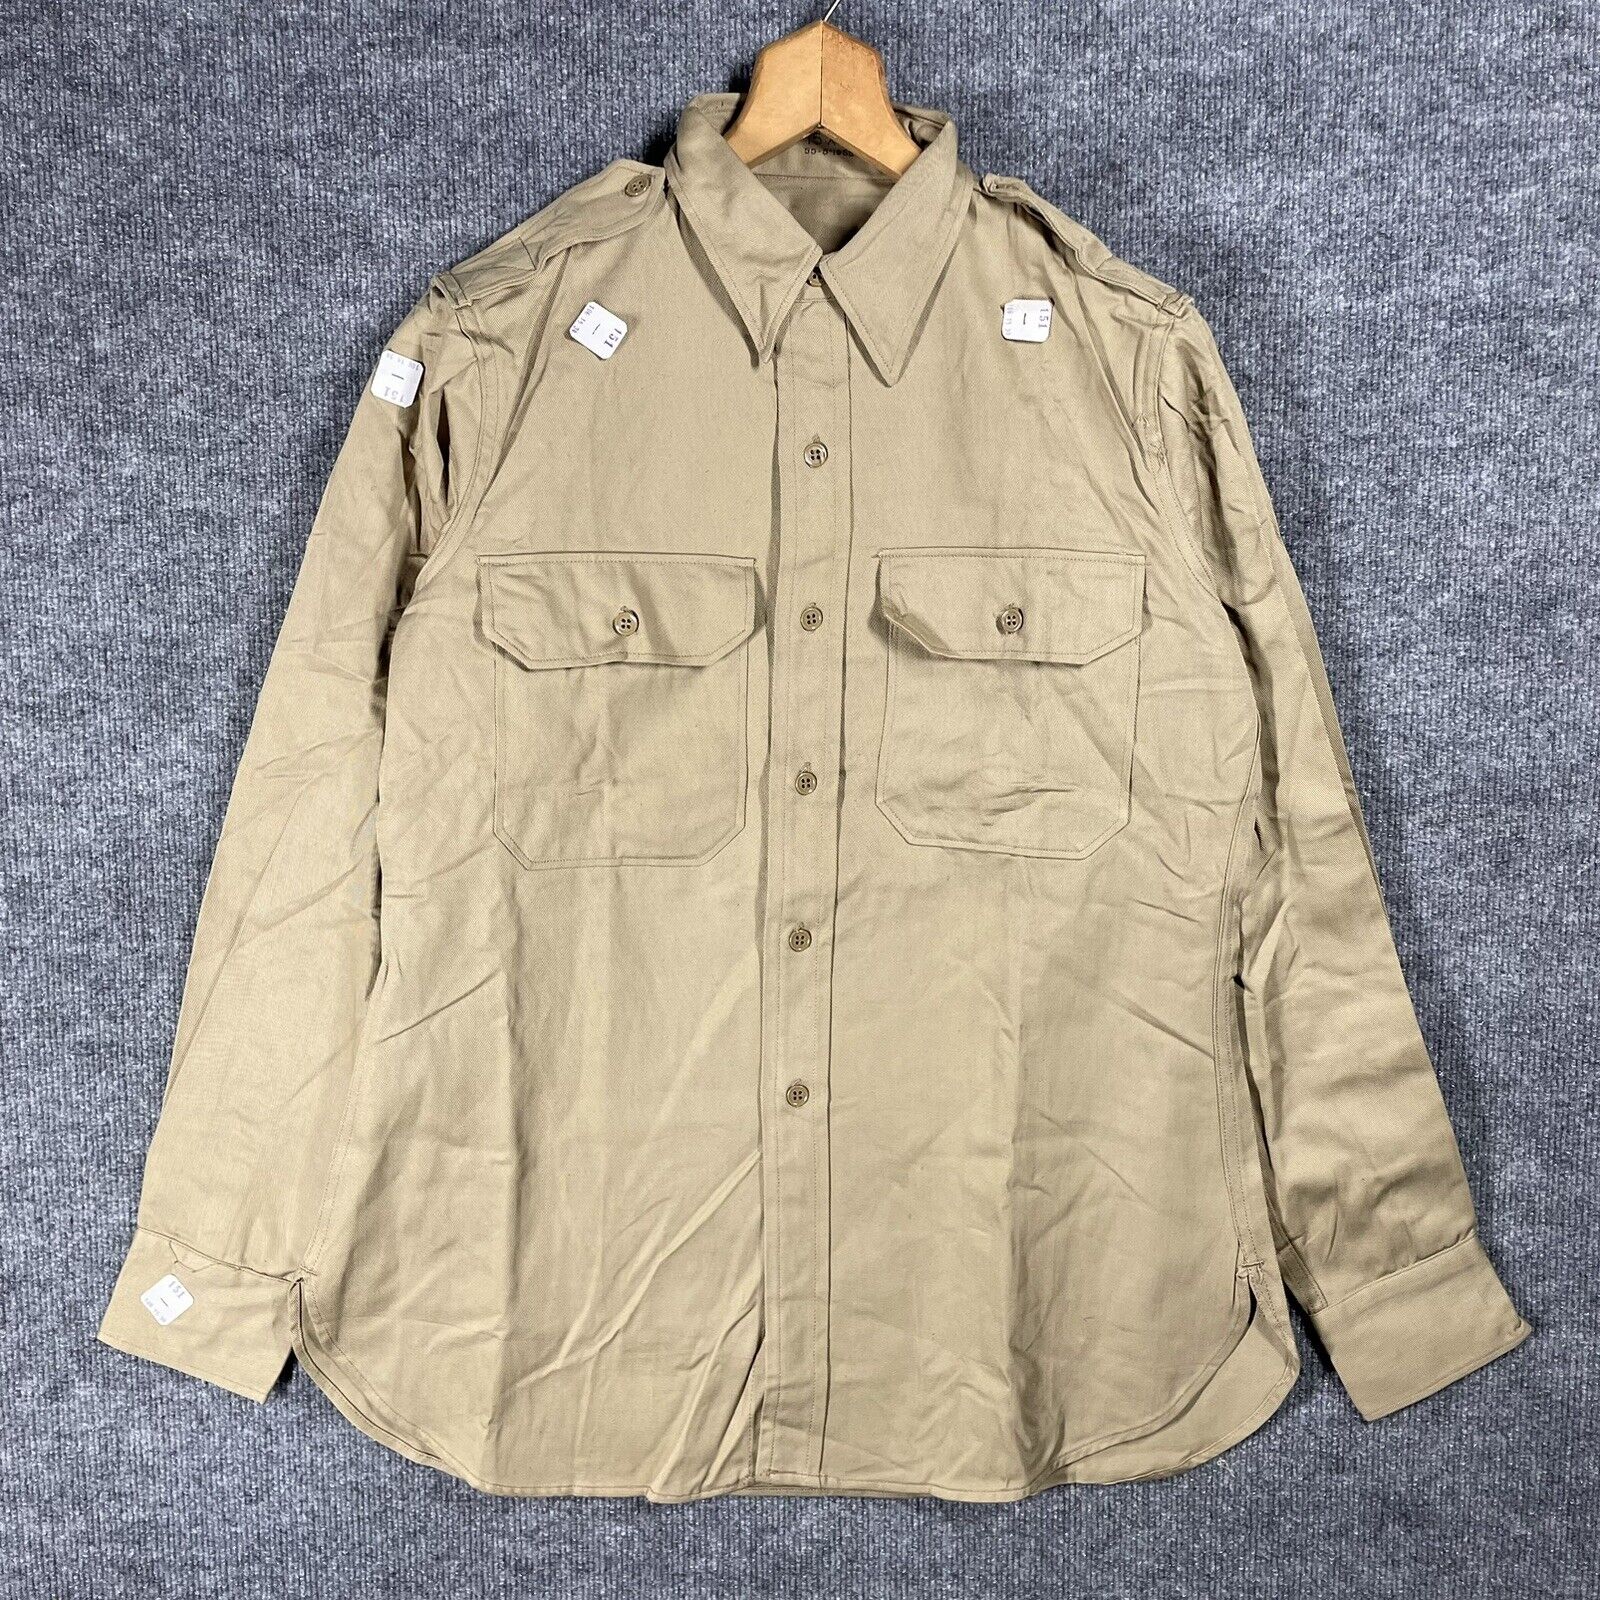 VINTAGE 40s WWII Khaki Uniform Shirt Size 15 DEADSTOCK NOS Cotton Field Utility